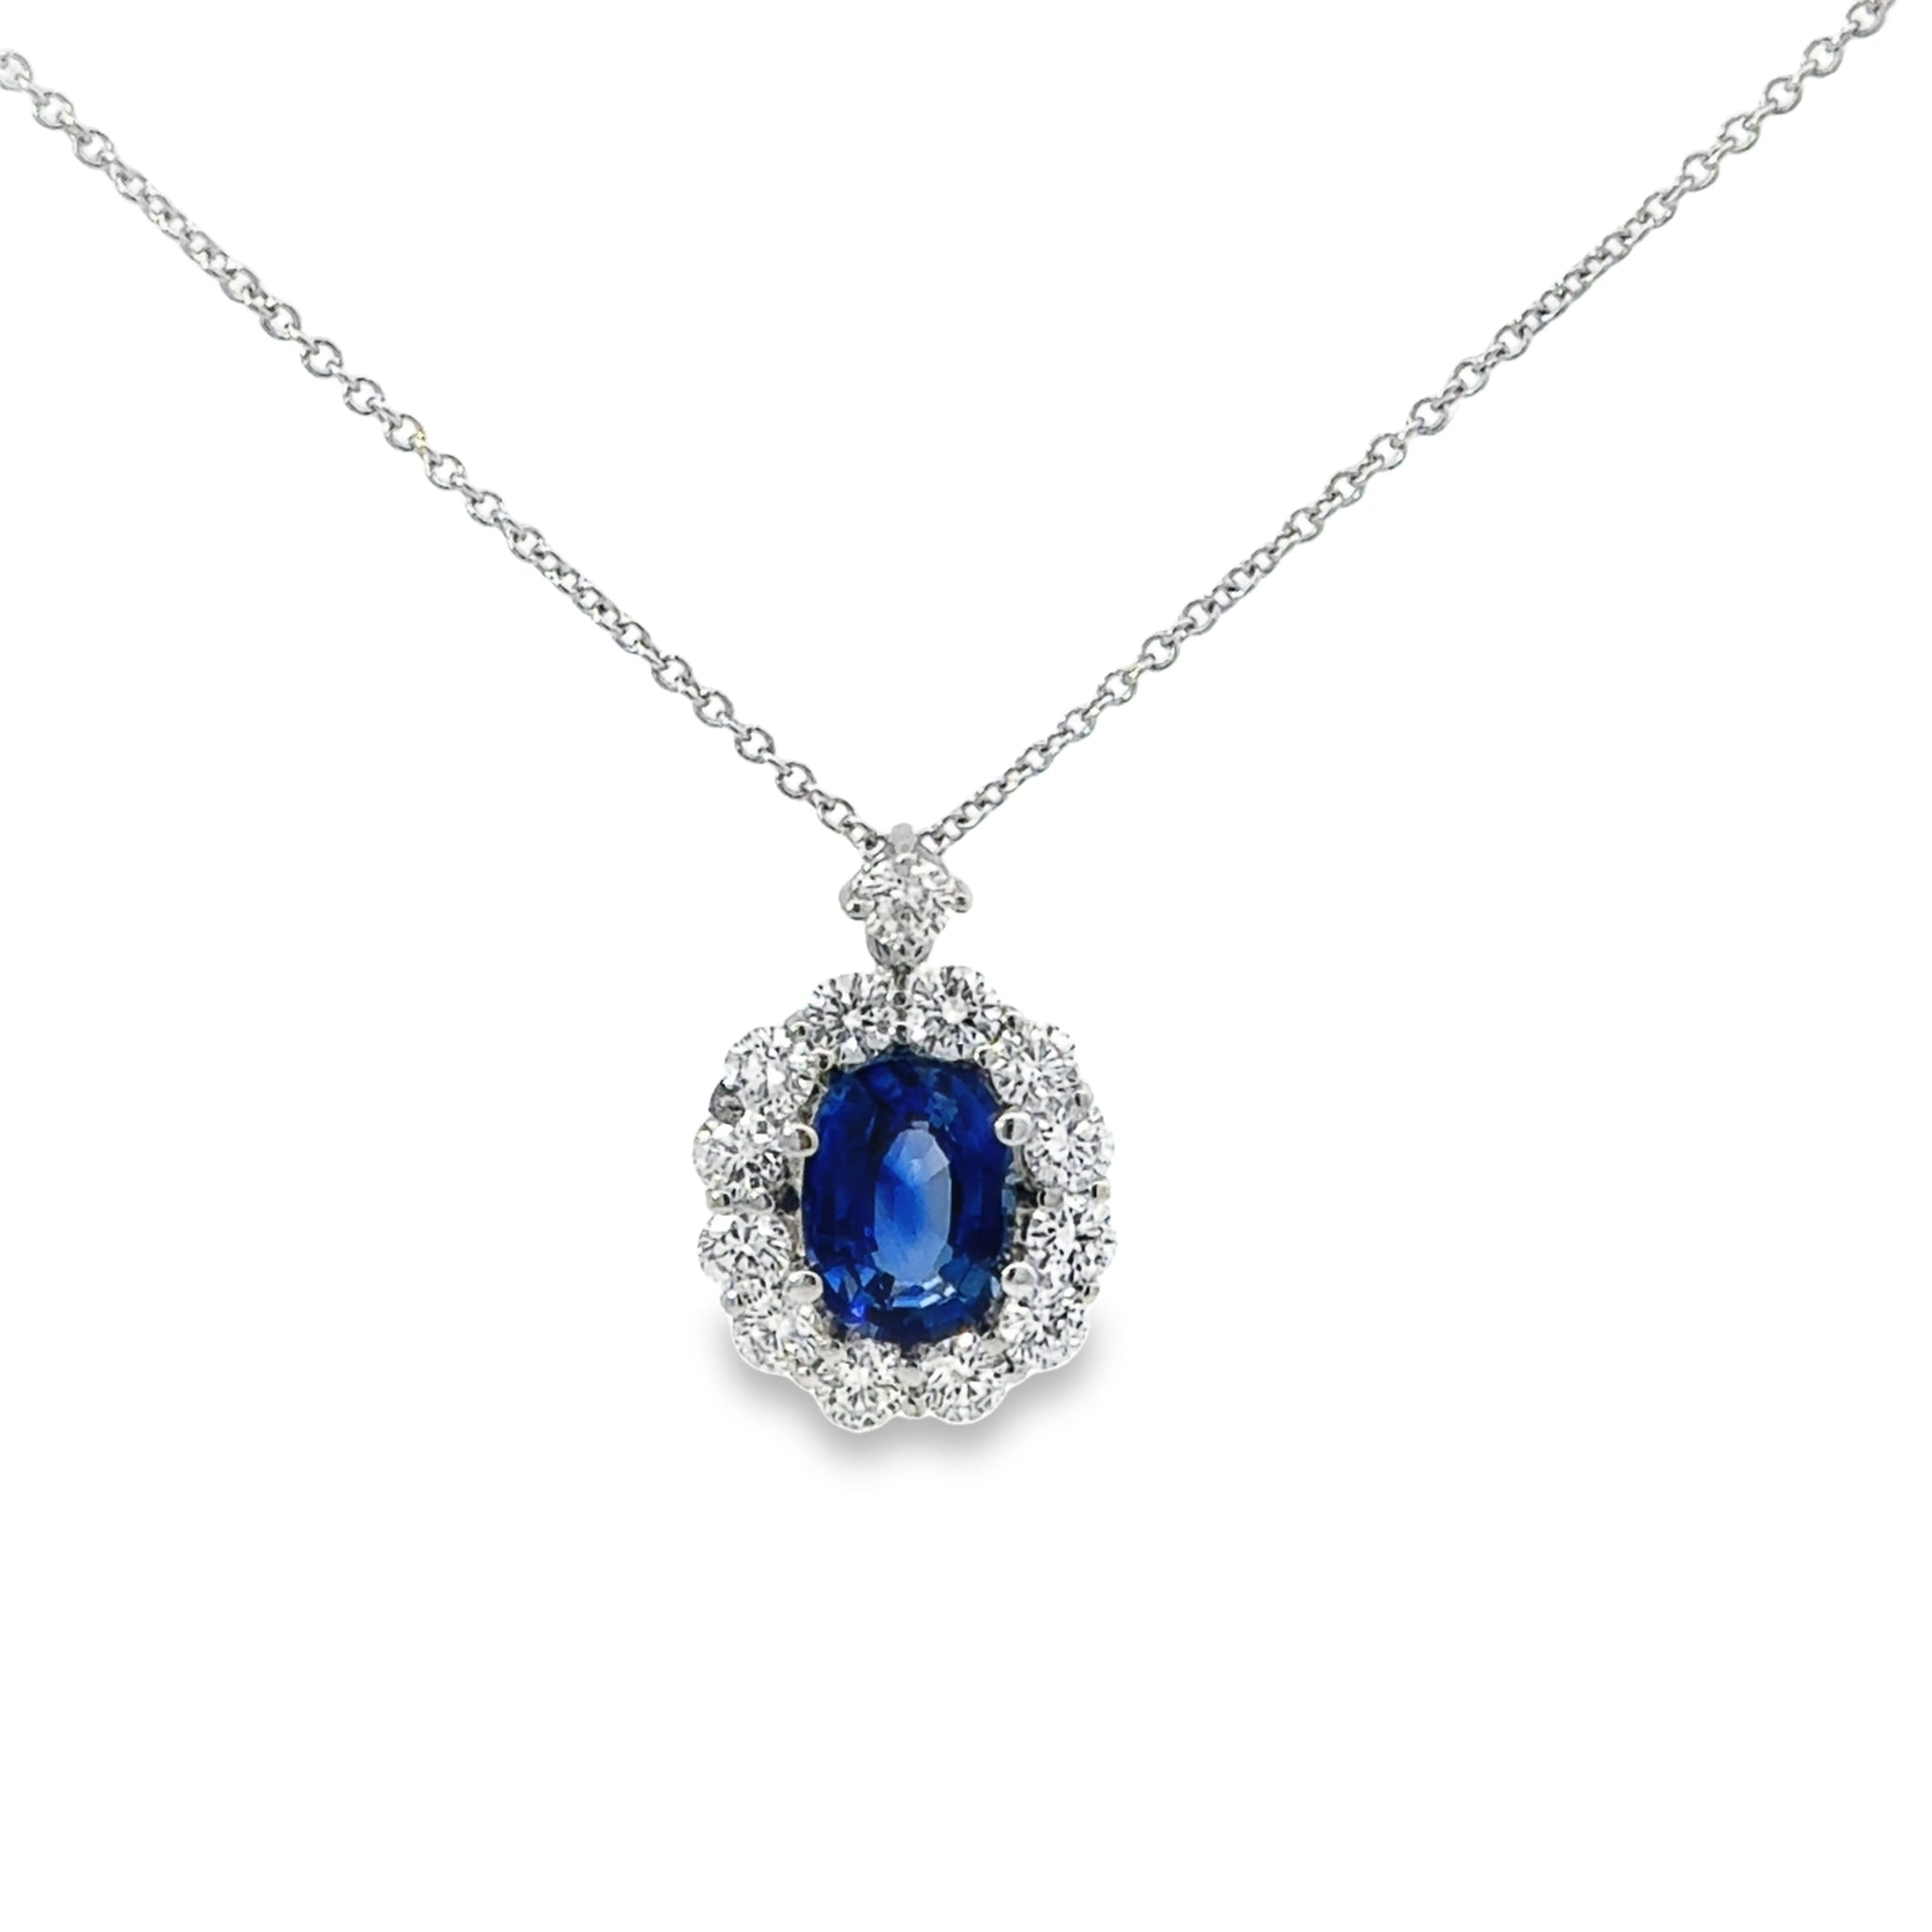 18k White Gold Oval Sapphire And Diamond Pendant